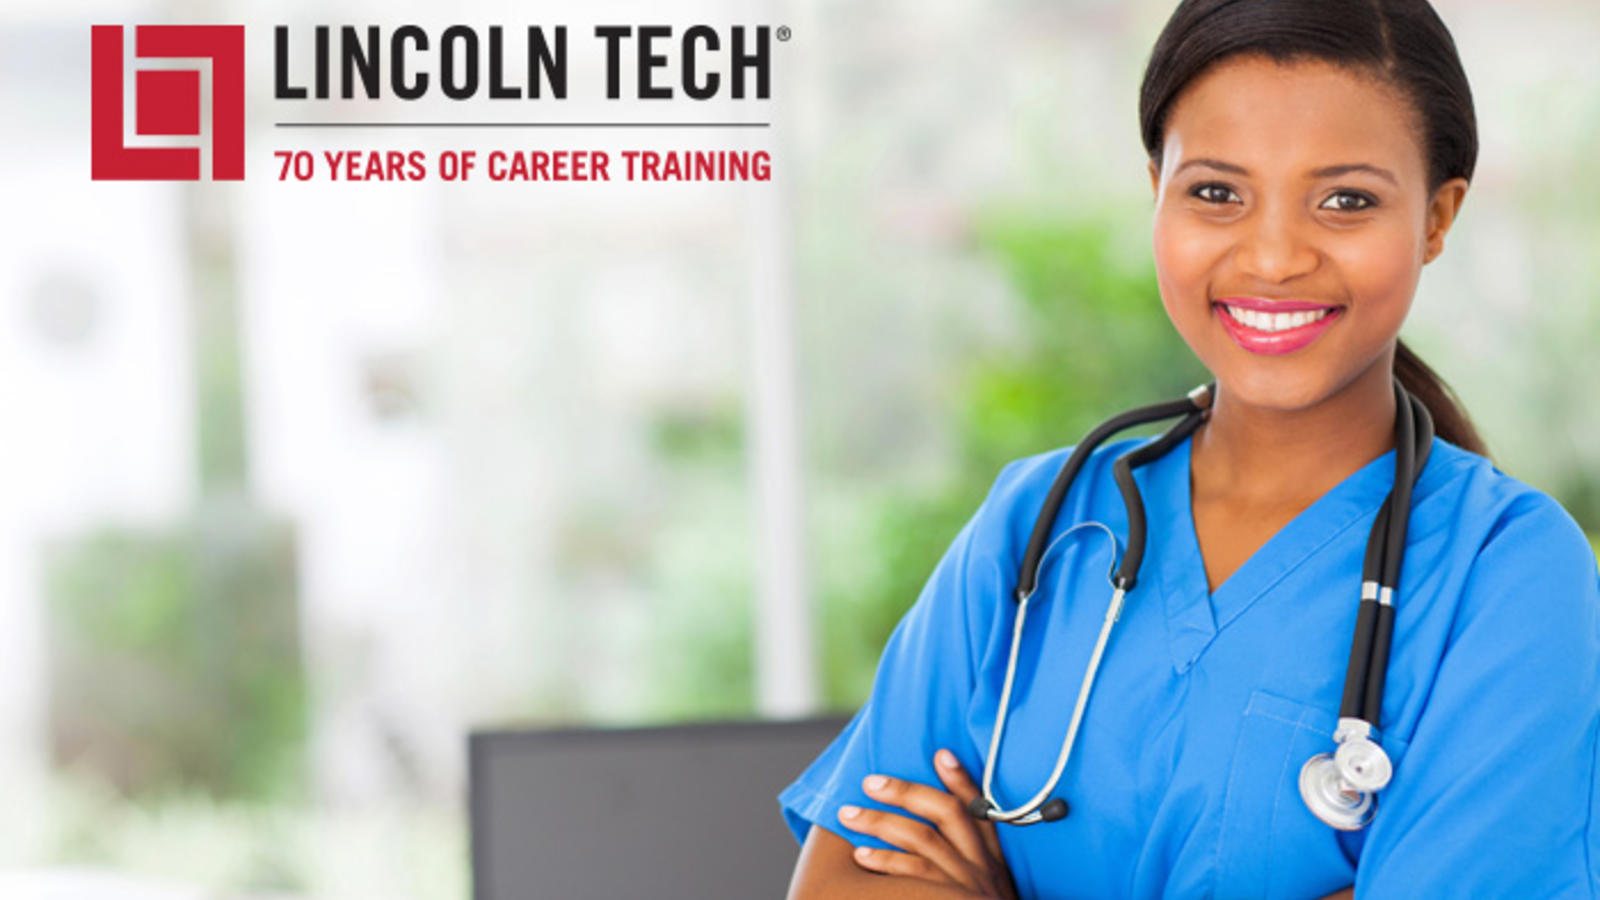 Nclex Preparation Is An Important Part Of Your Nursing Education